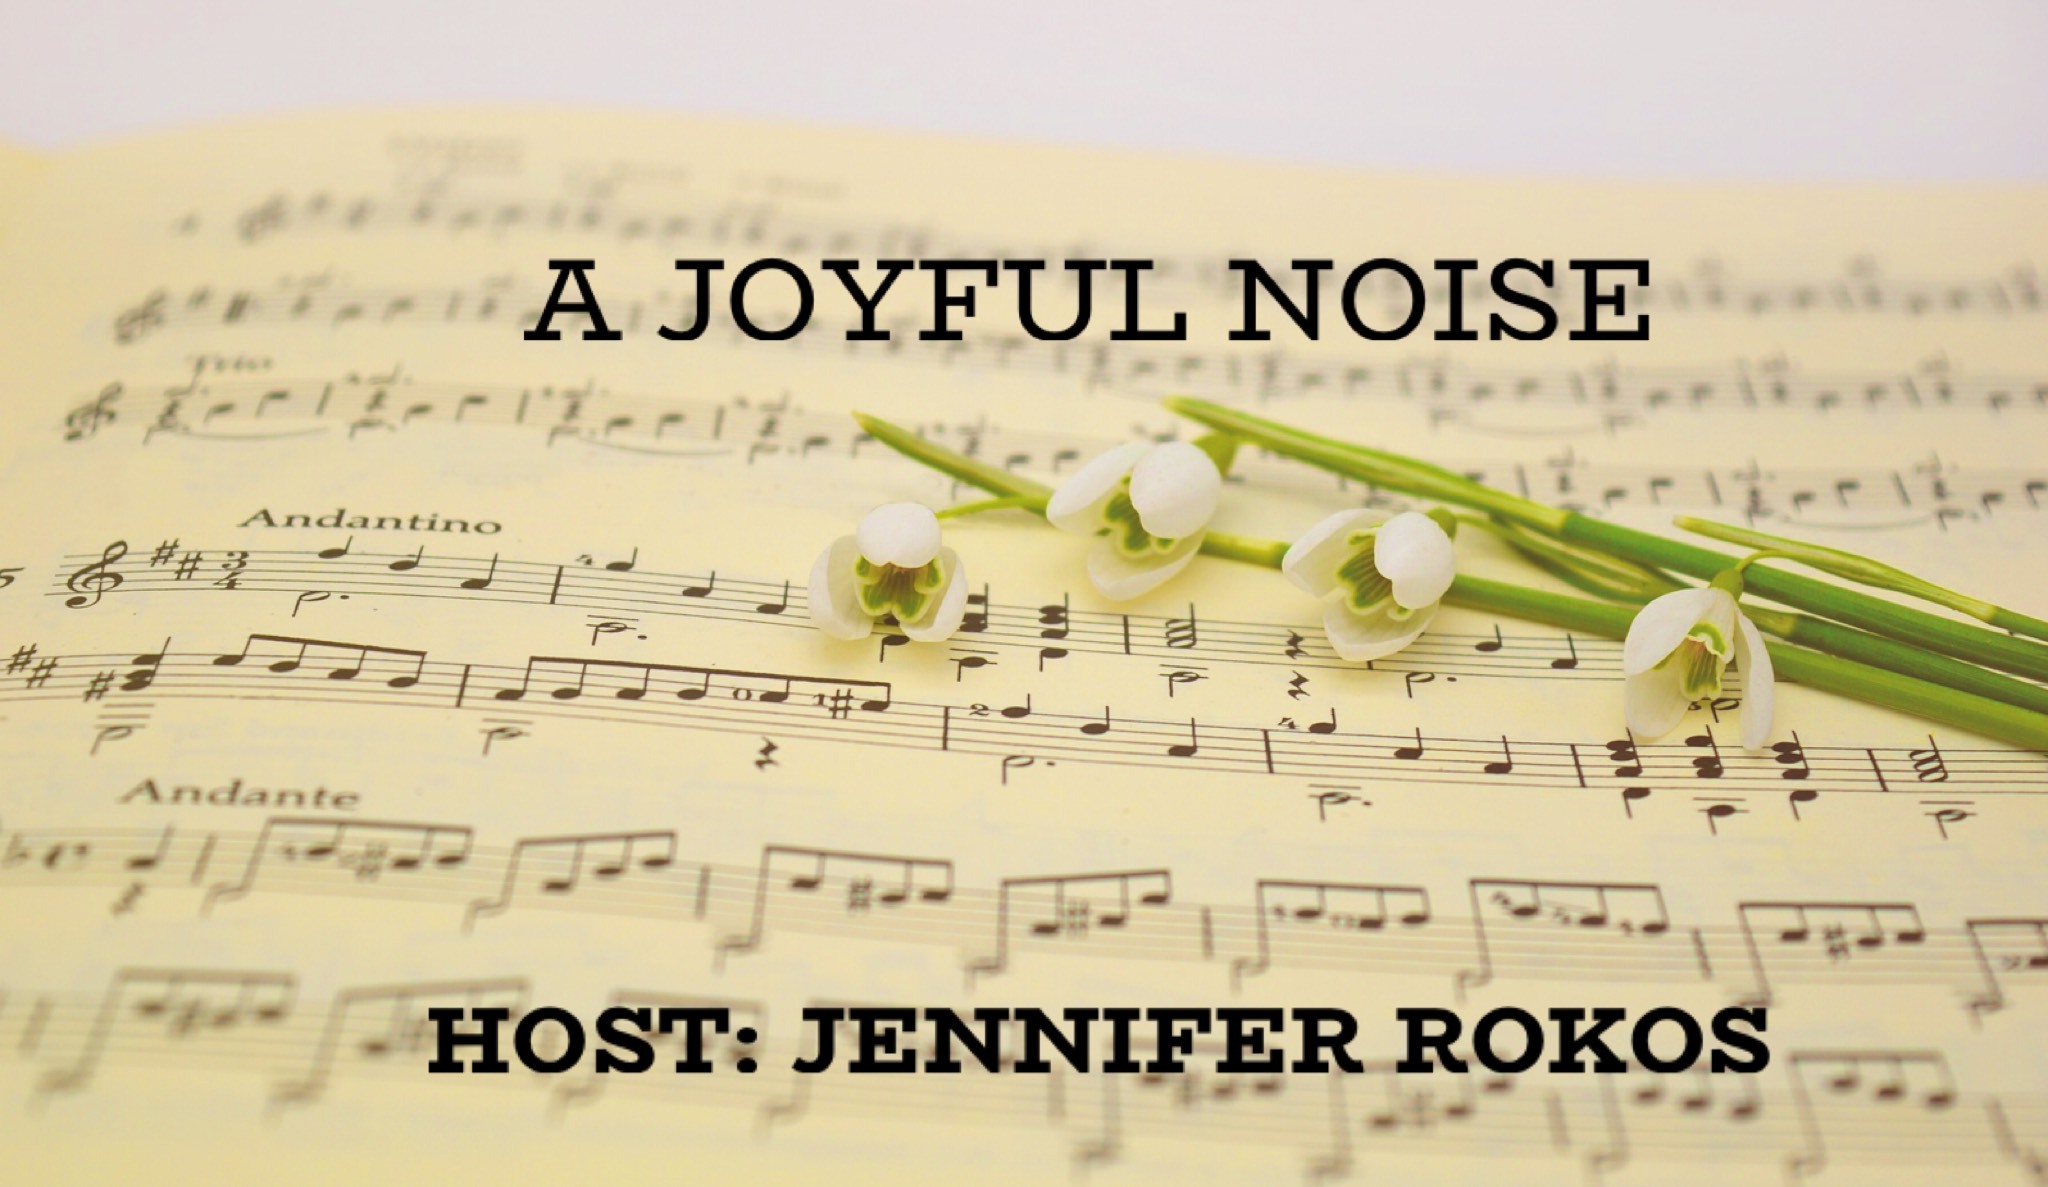 A Joyful Noiise